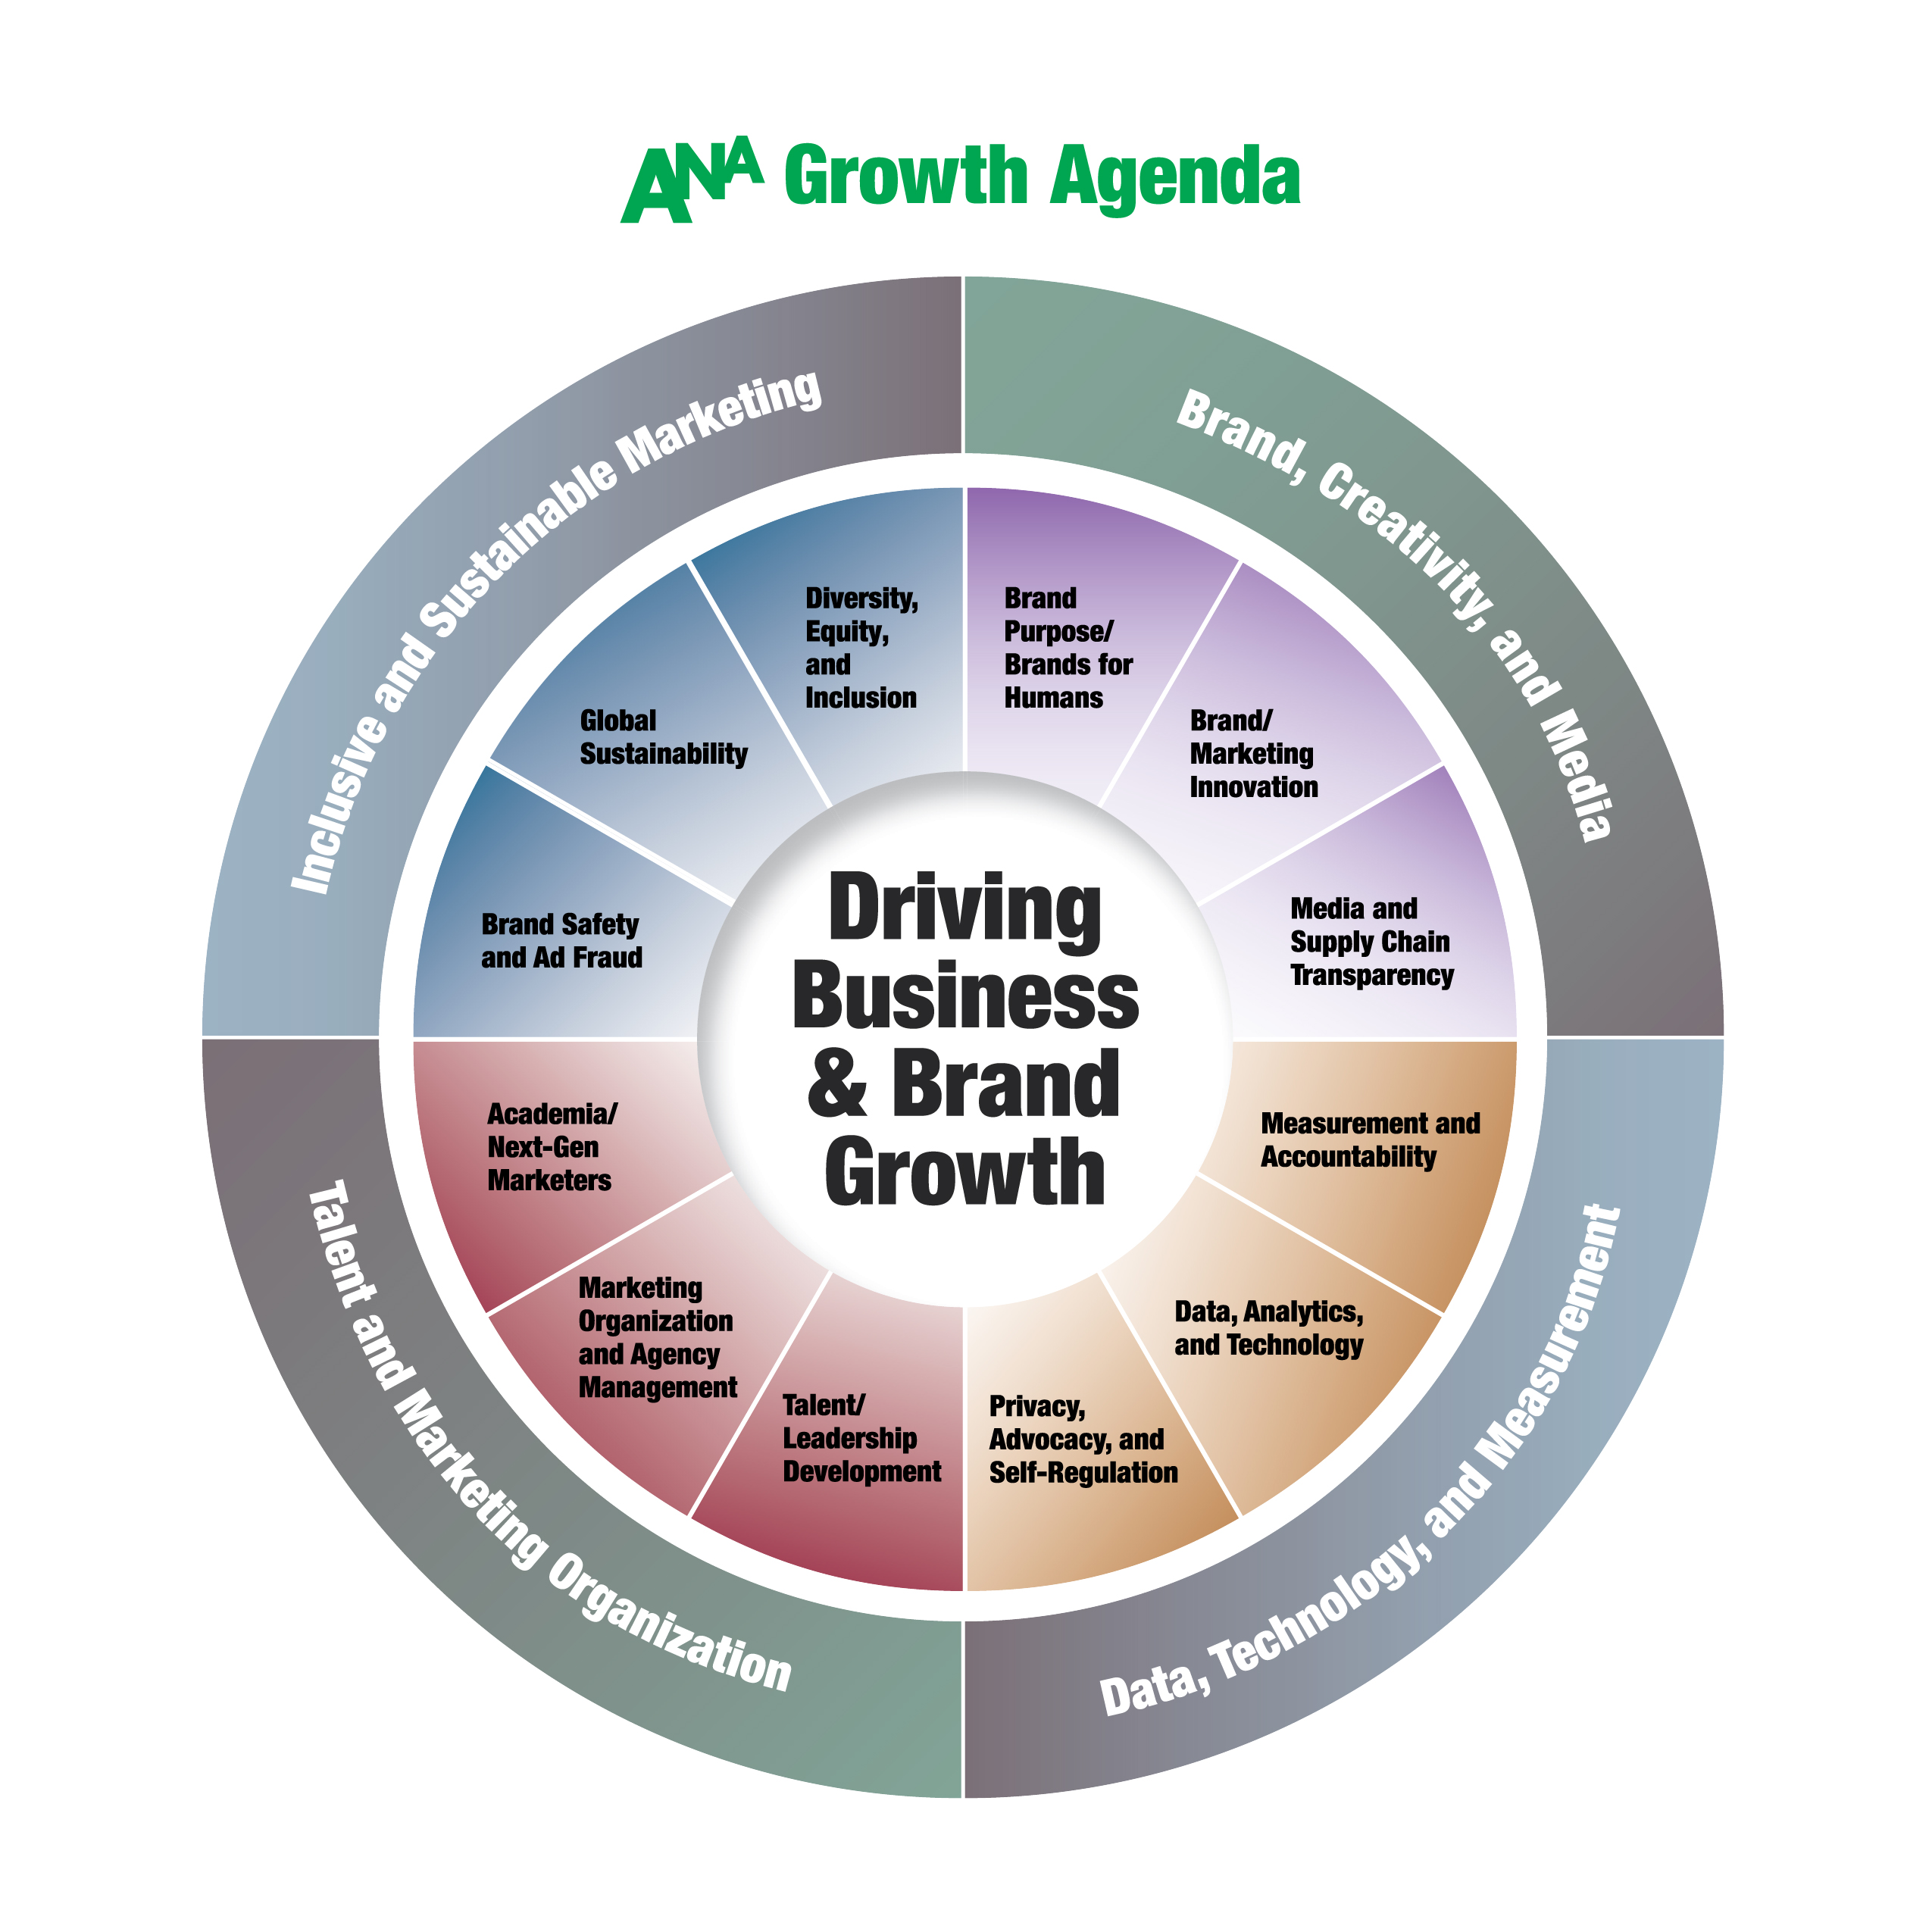 Image of the ANA Growth Agenda